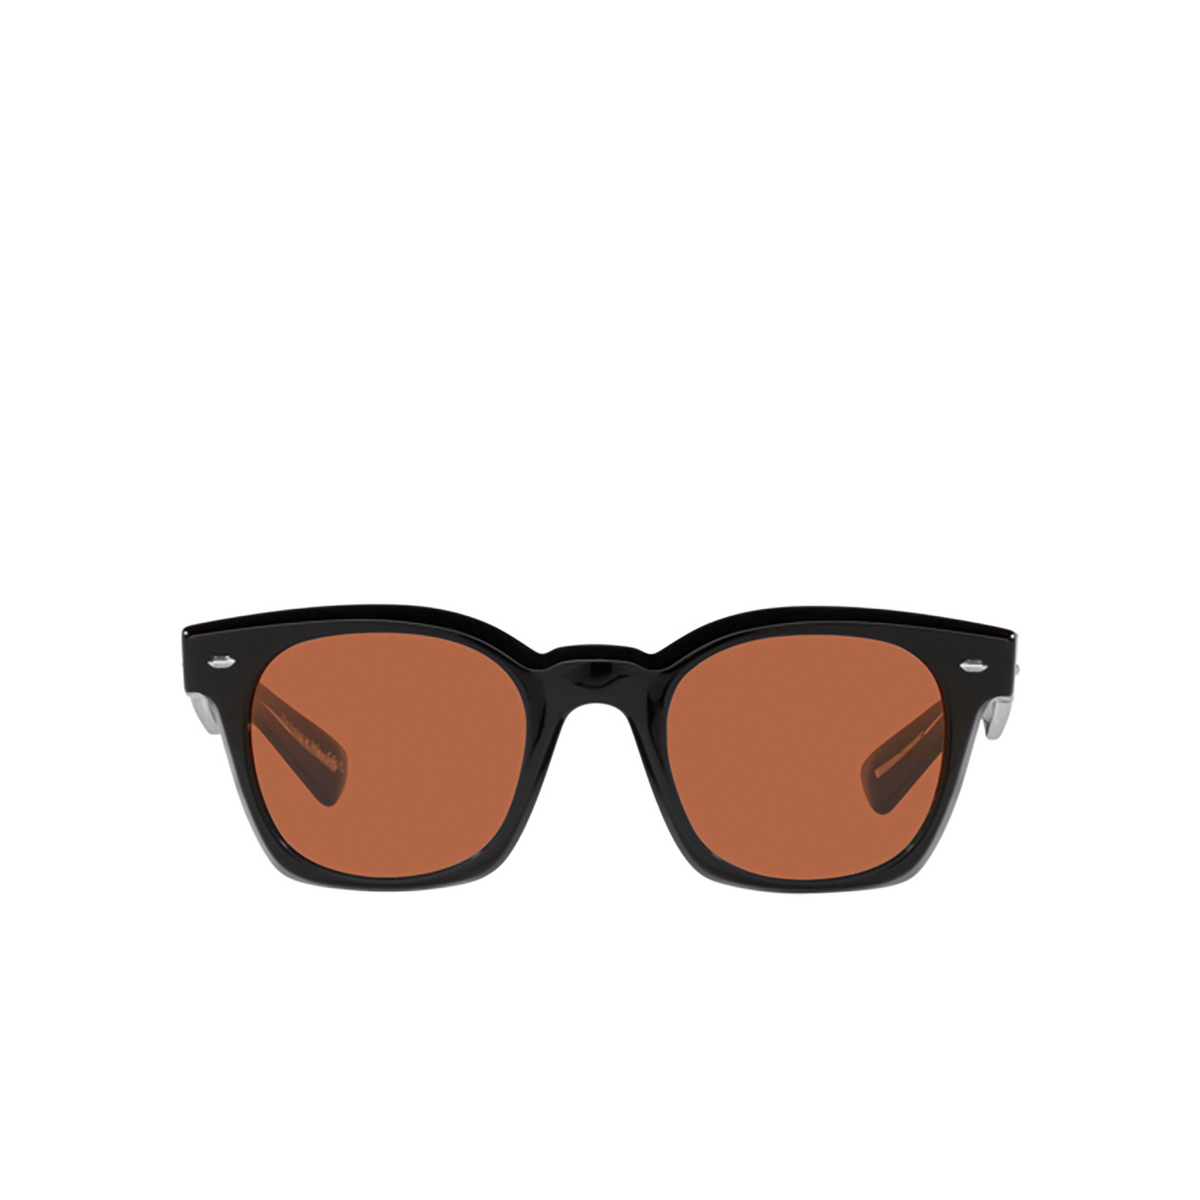 Oliver Peoples MERCEAUX Sunglasses 149253 Black - front view